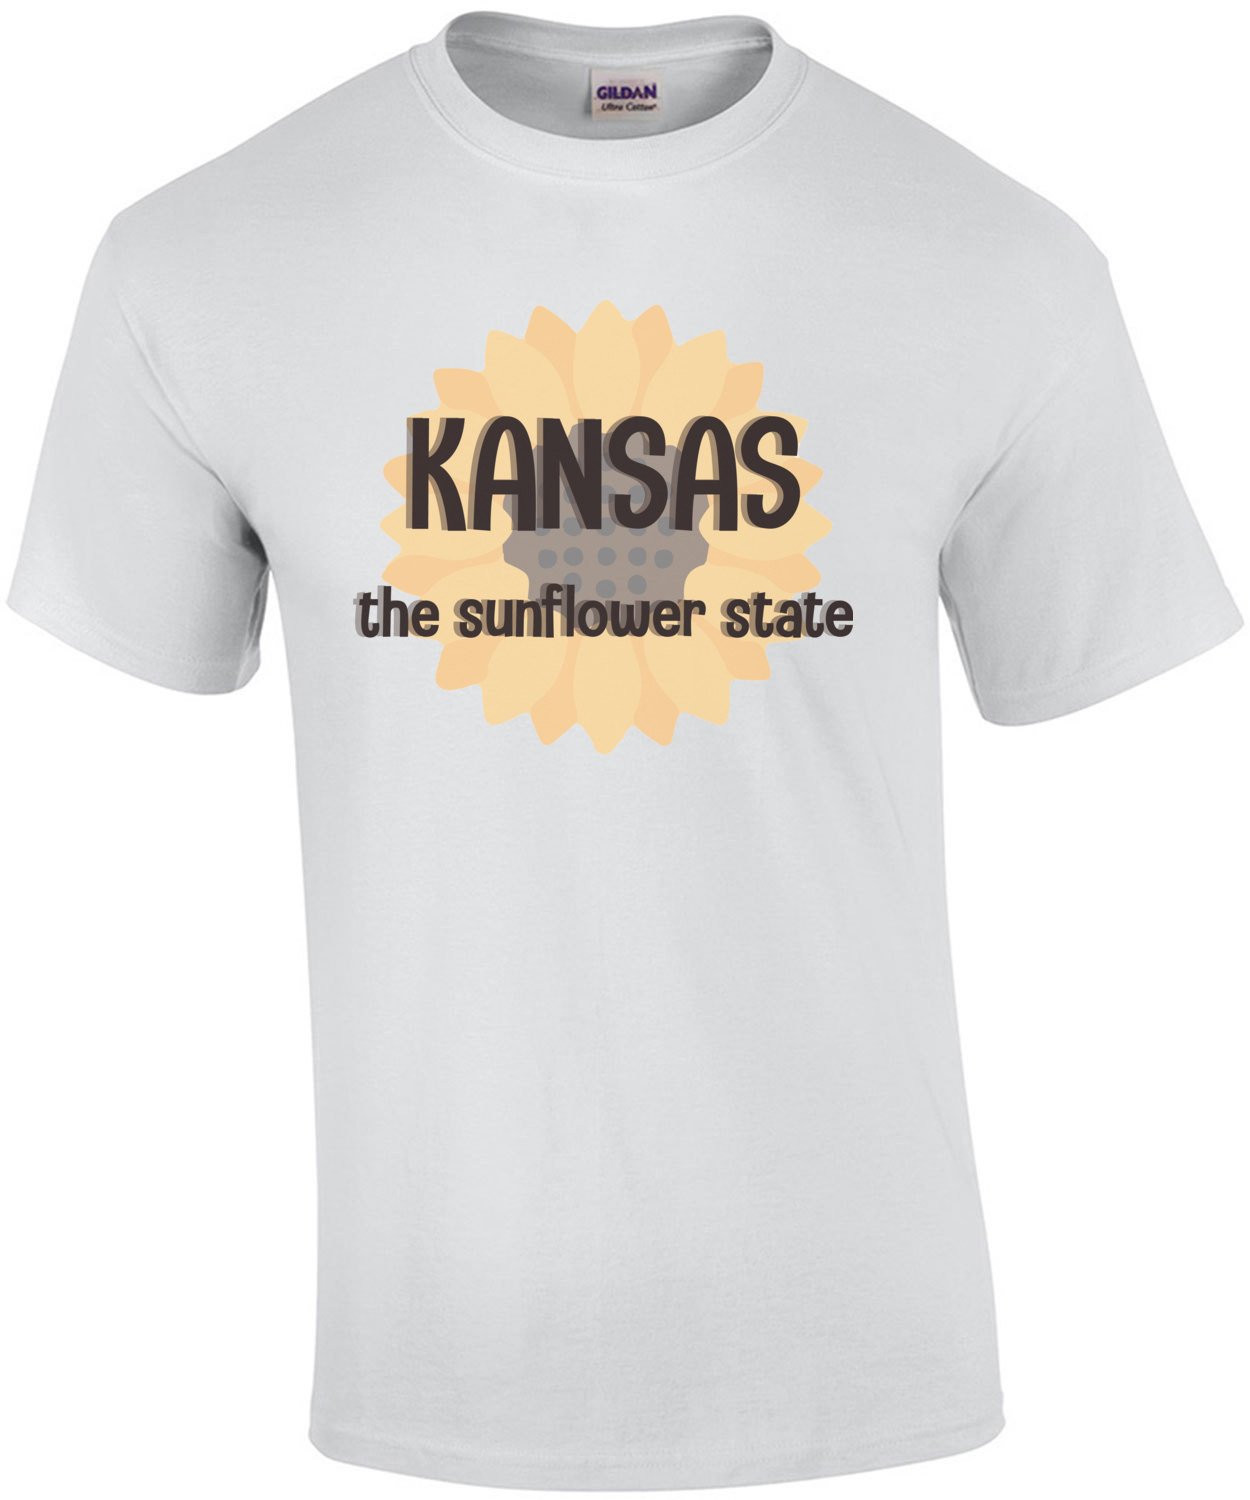 Kansas - the sunflower state - Kansas T-Shirt